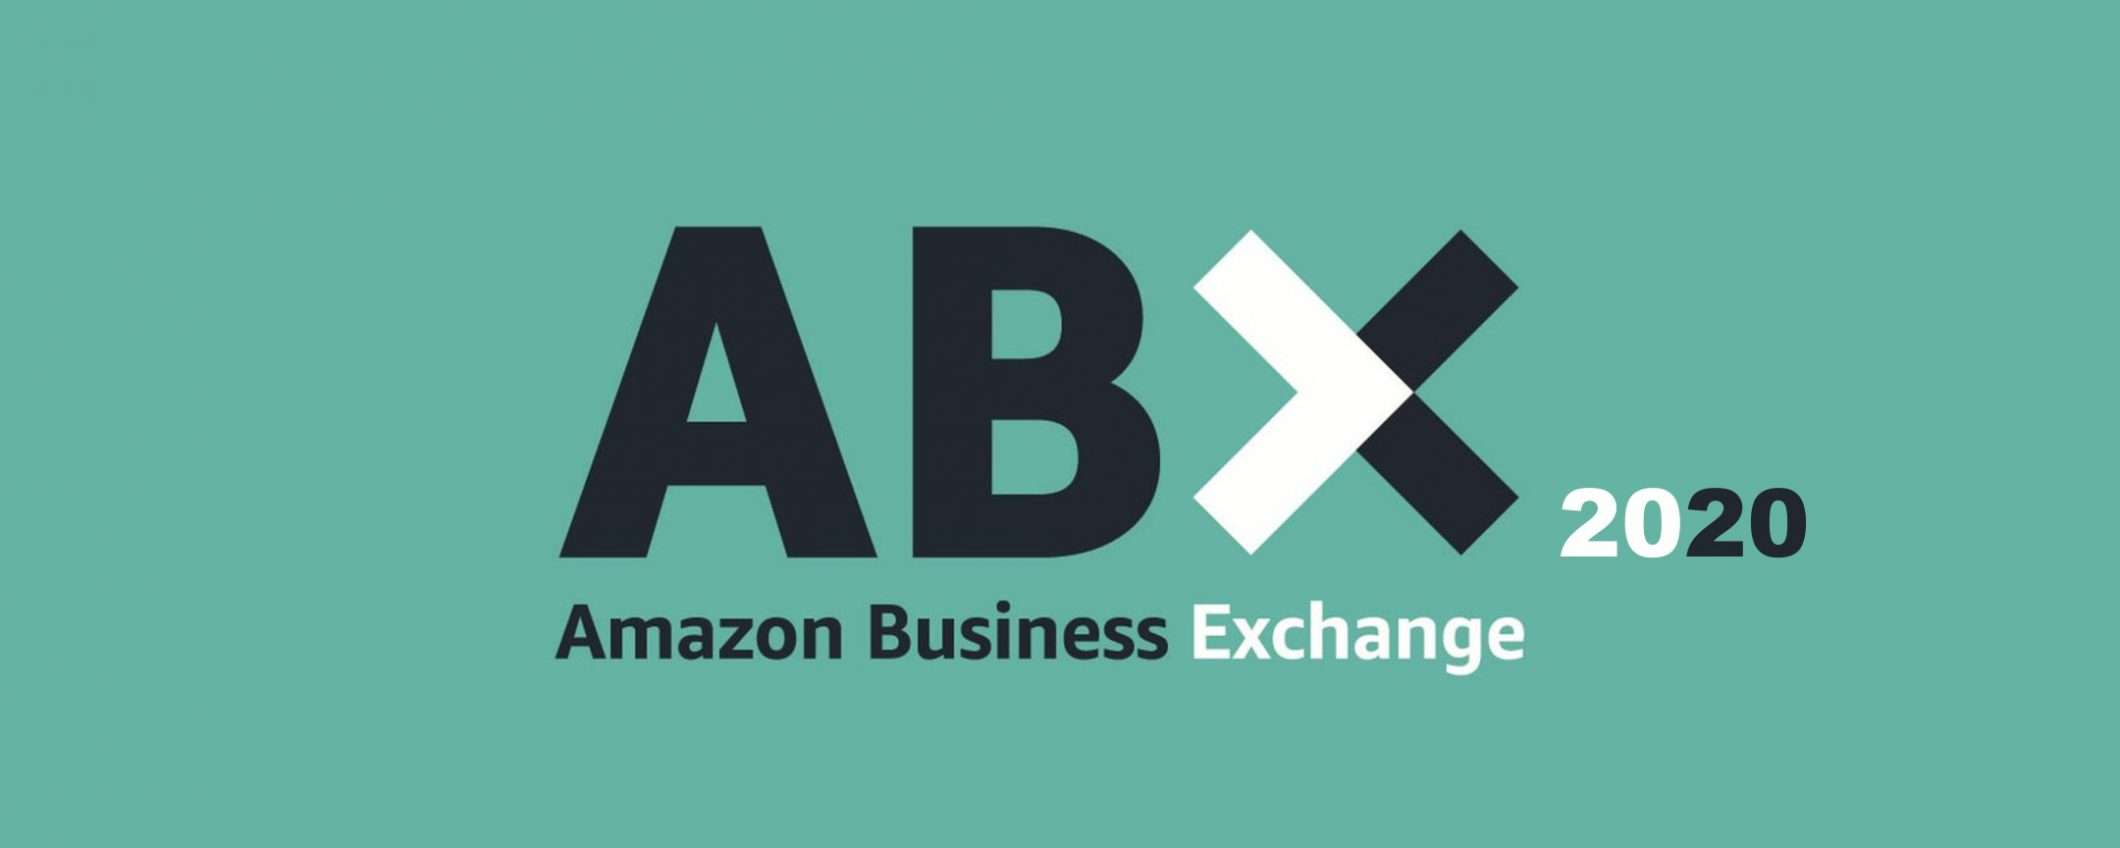 Amazon Business Exchange (ABX): edizione 2020 online